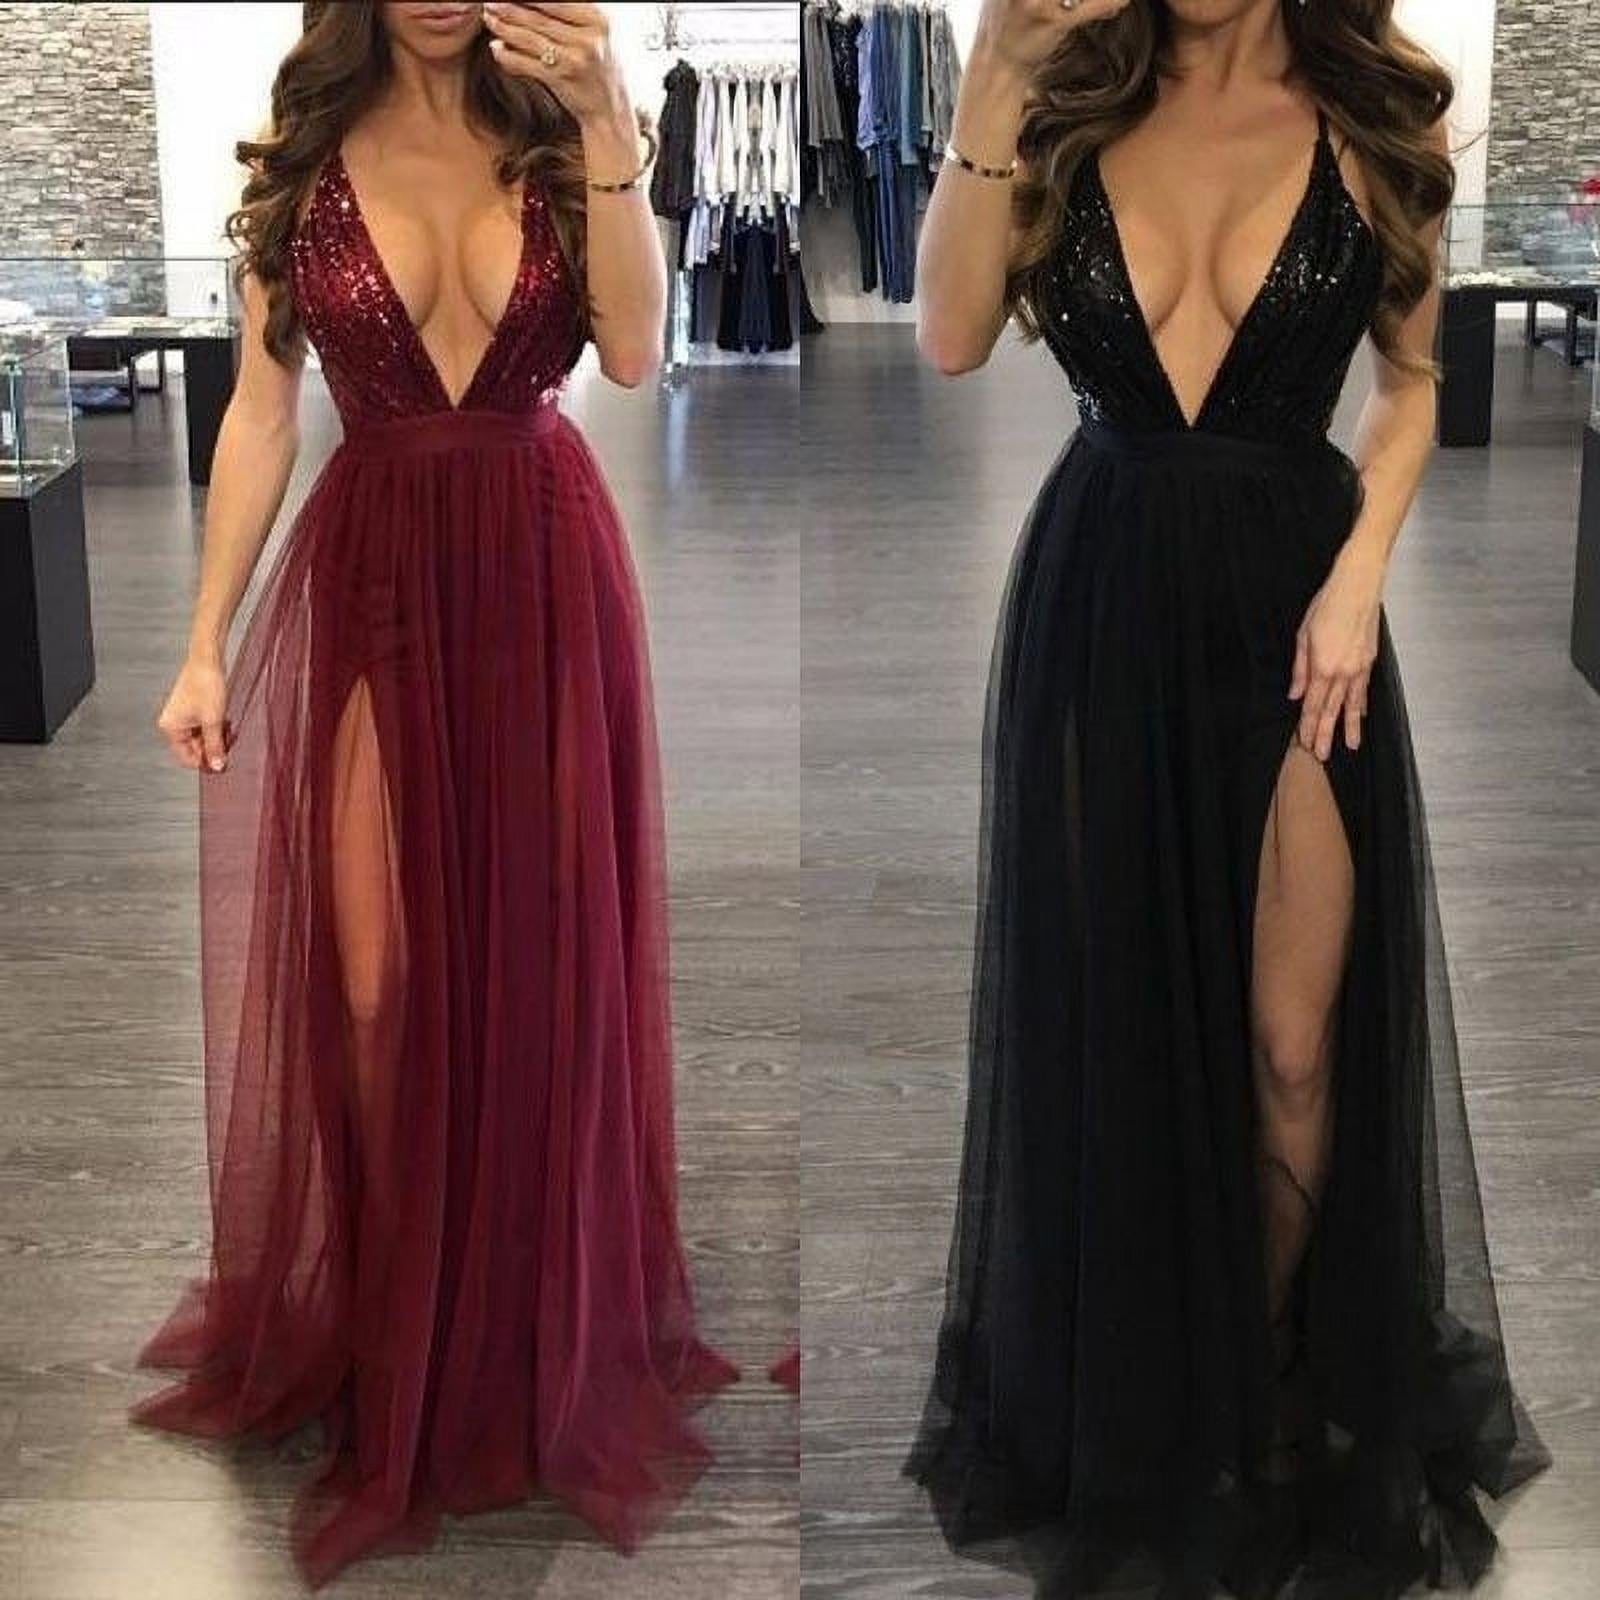 NEW Black Beige Lace Formal Clubwear Cocktail Long Party DRESS Gown S M L XL 